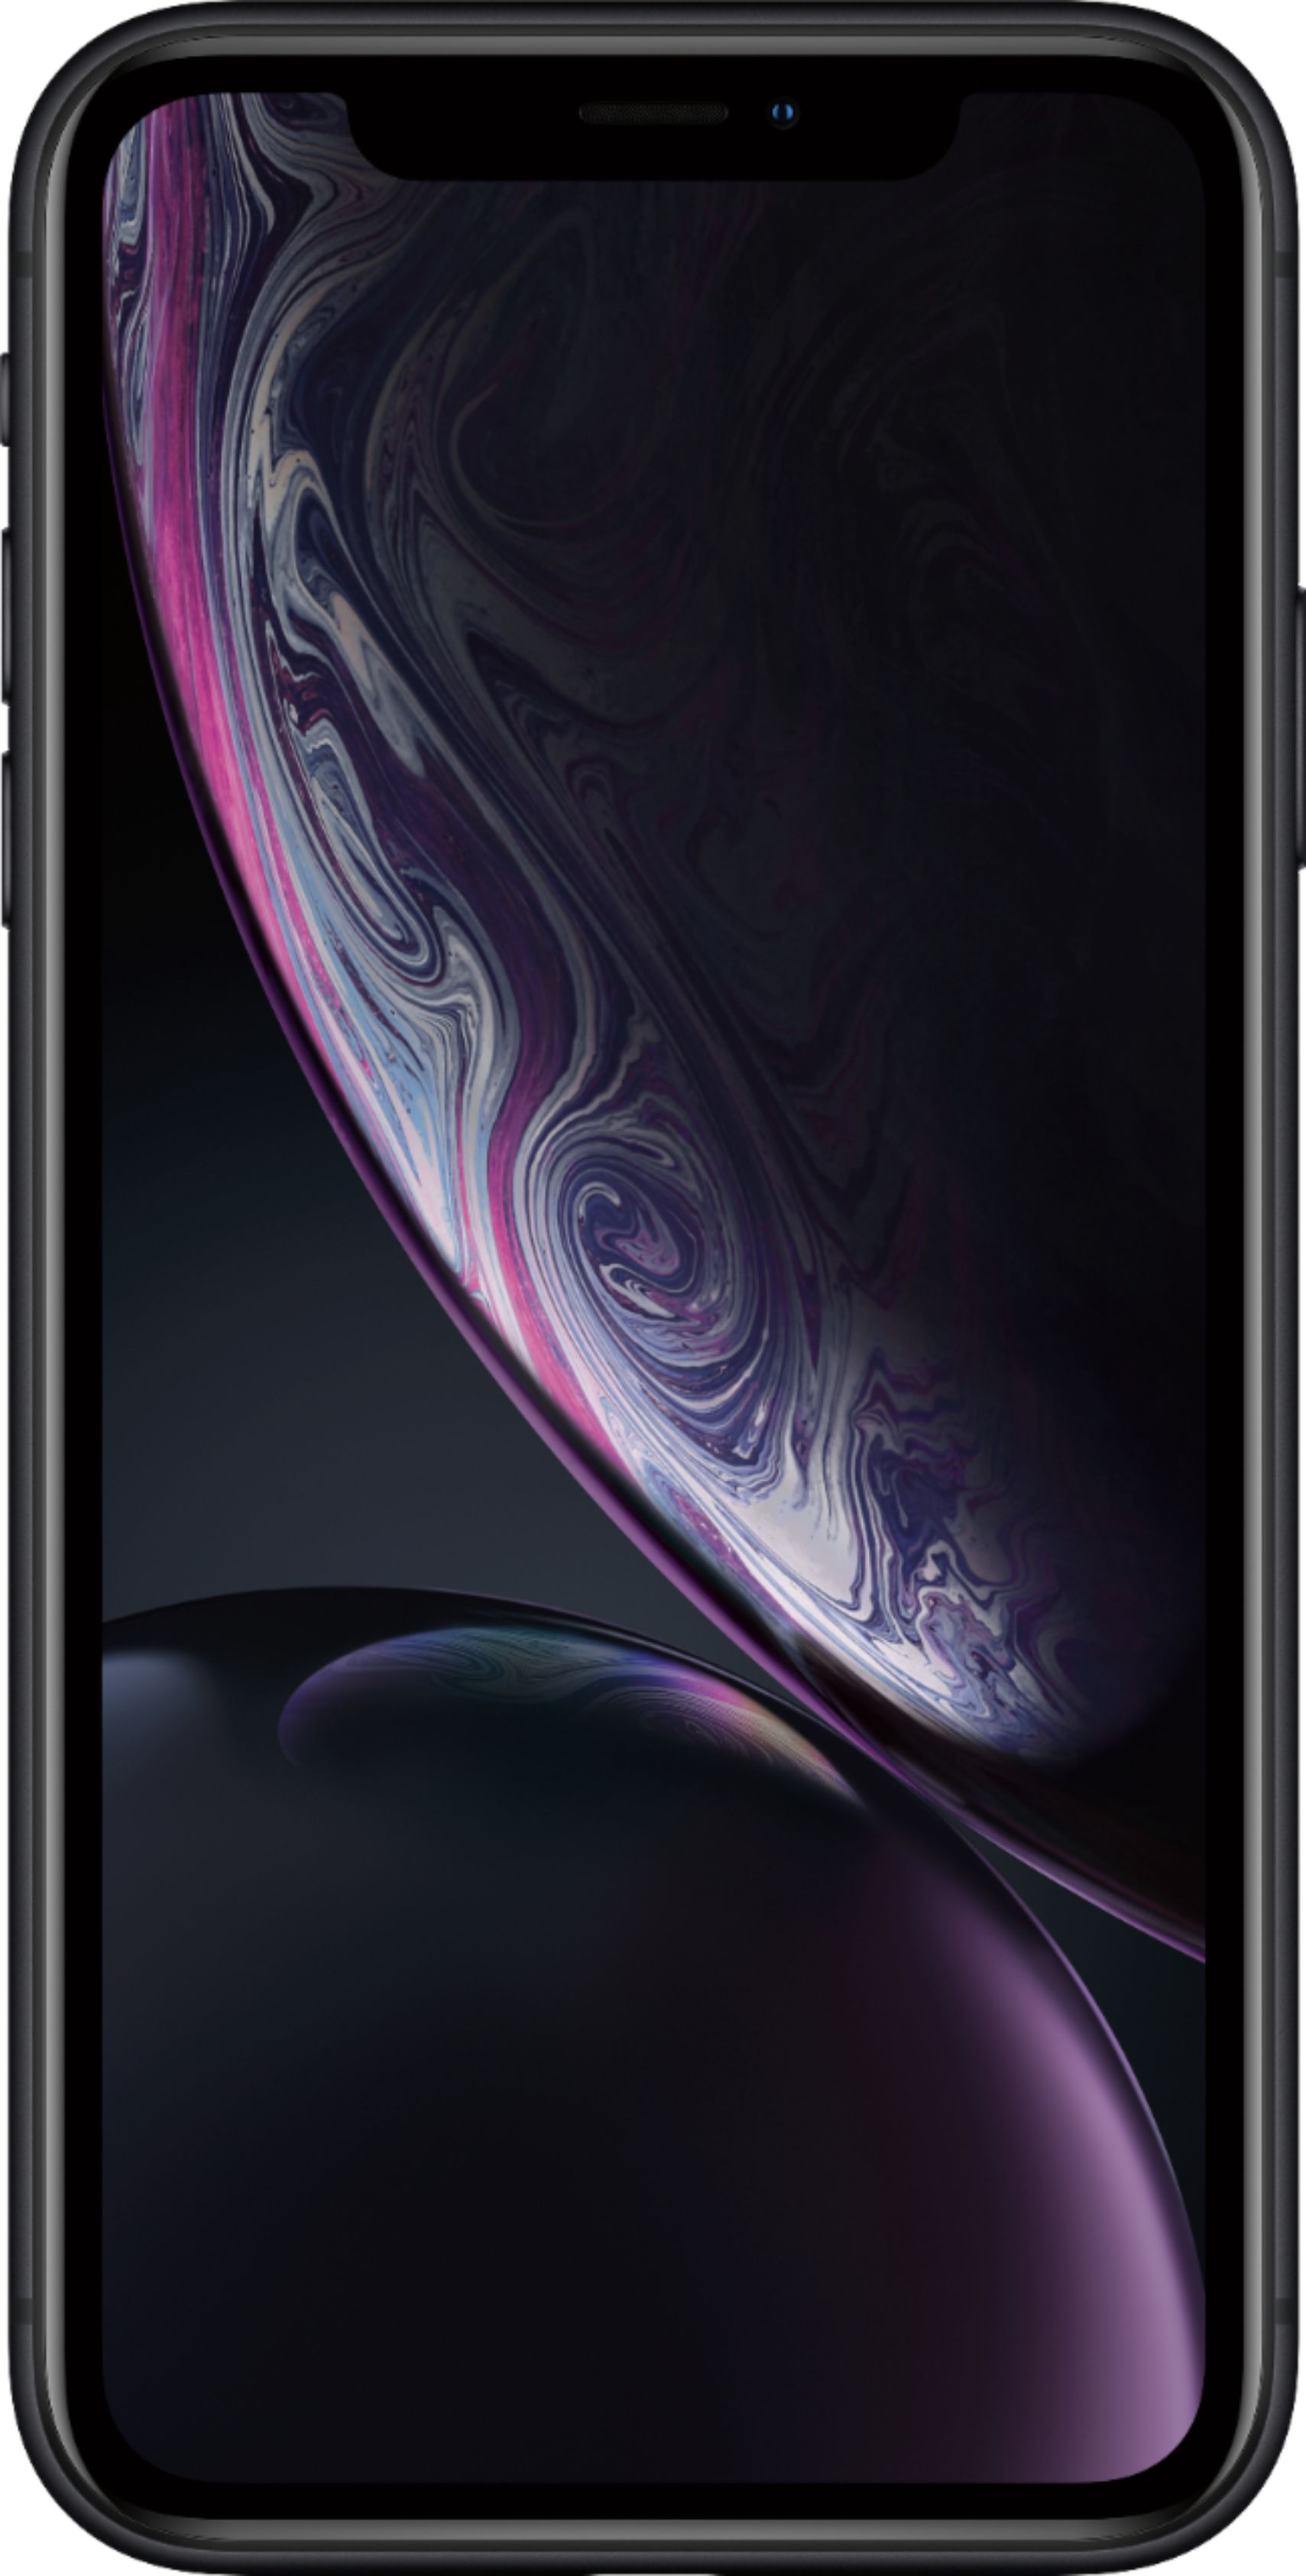 Apple iPhone XR 128GB Black (AT&T) MRYY2LL/A - Best Buy